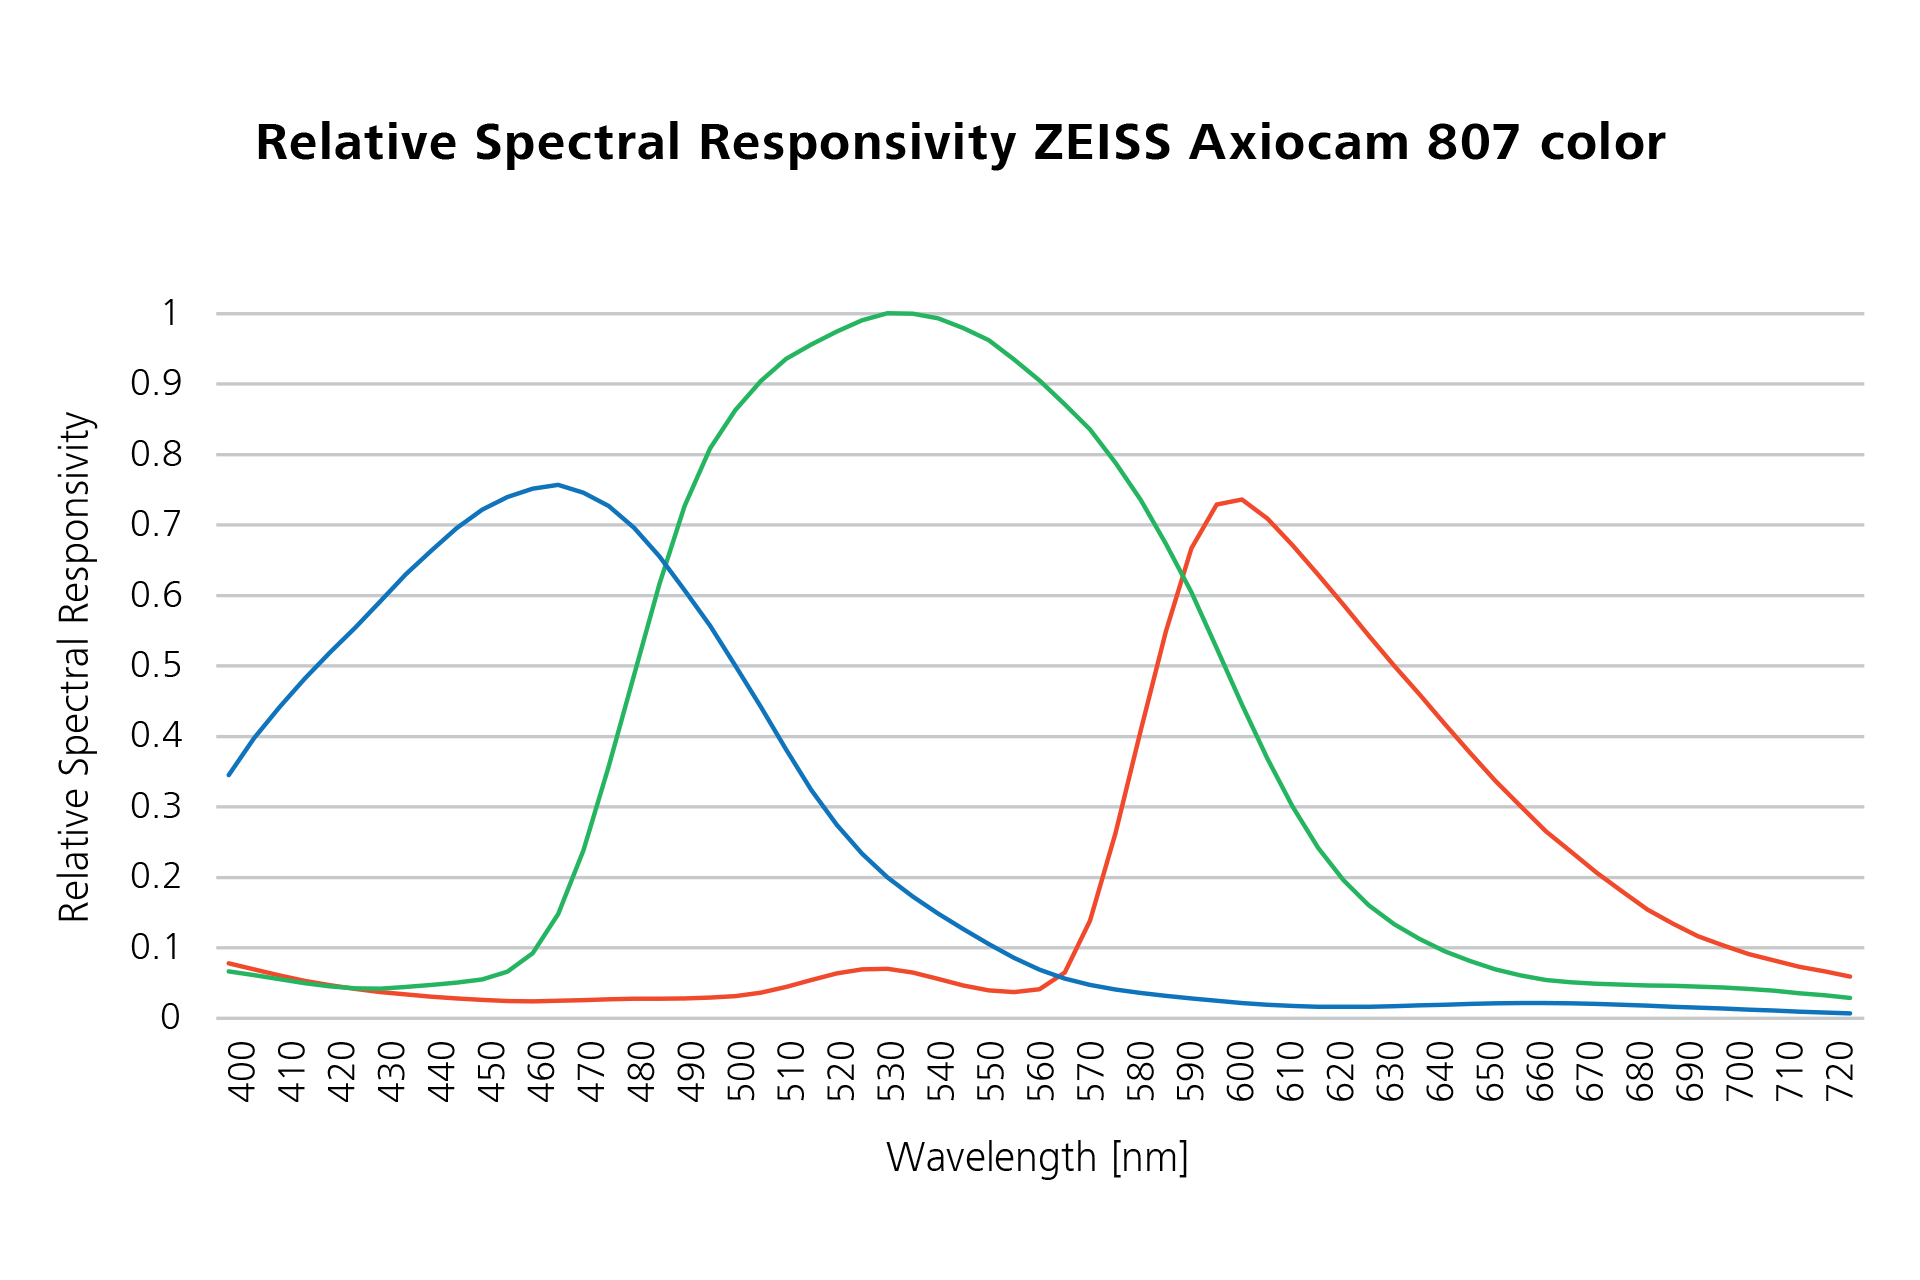 Relative spectral responsivity